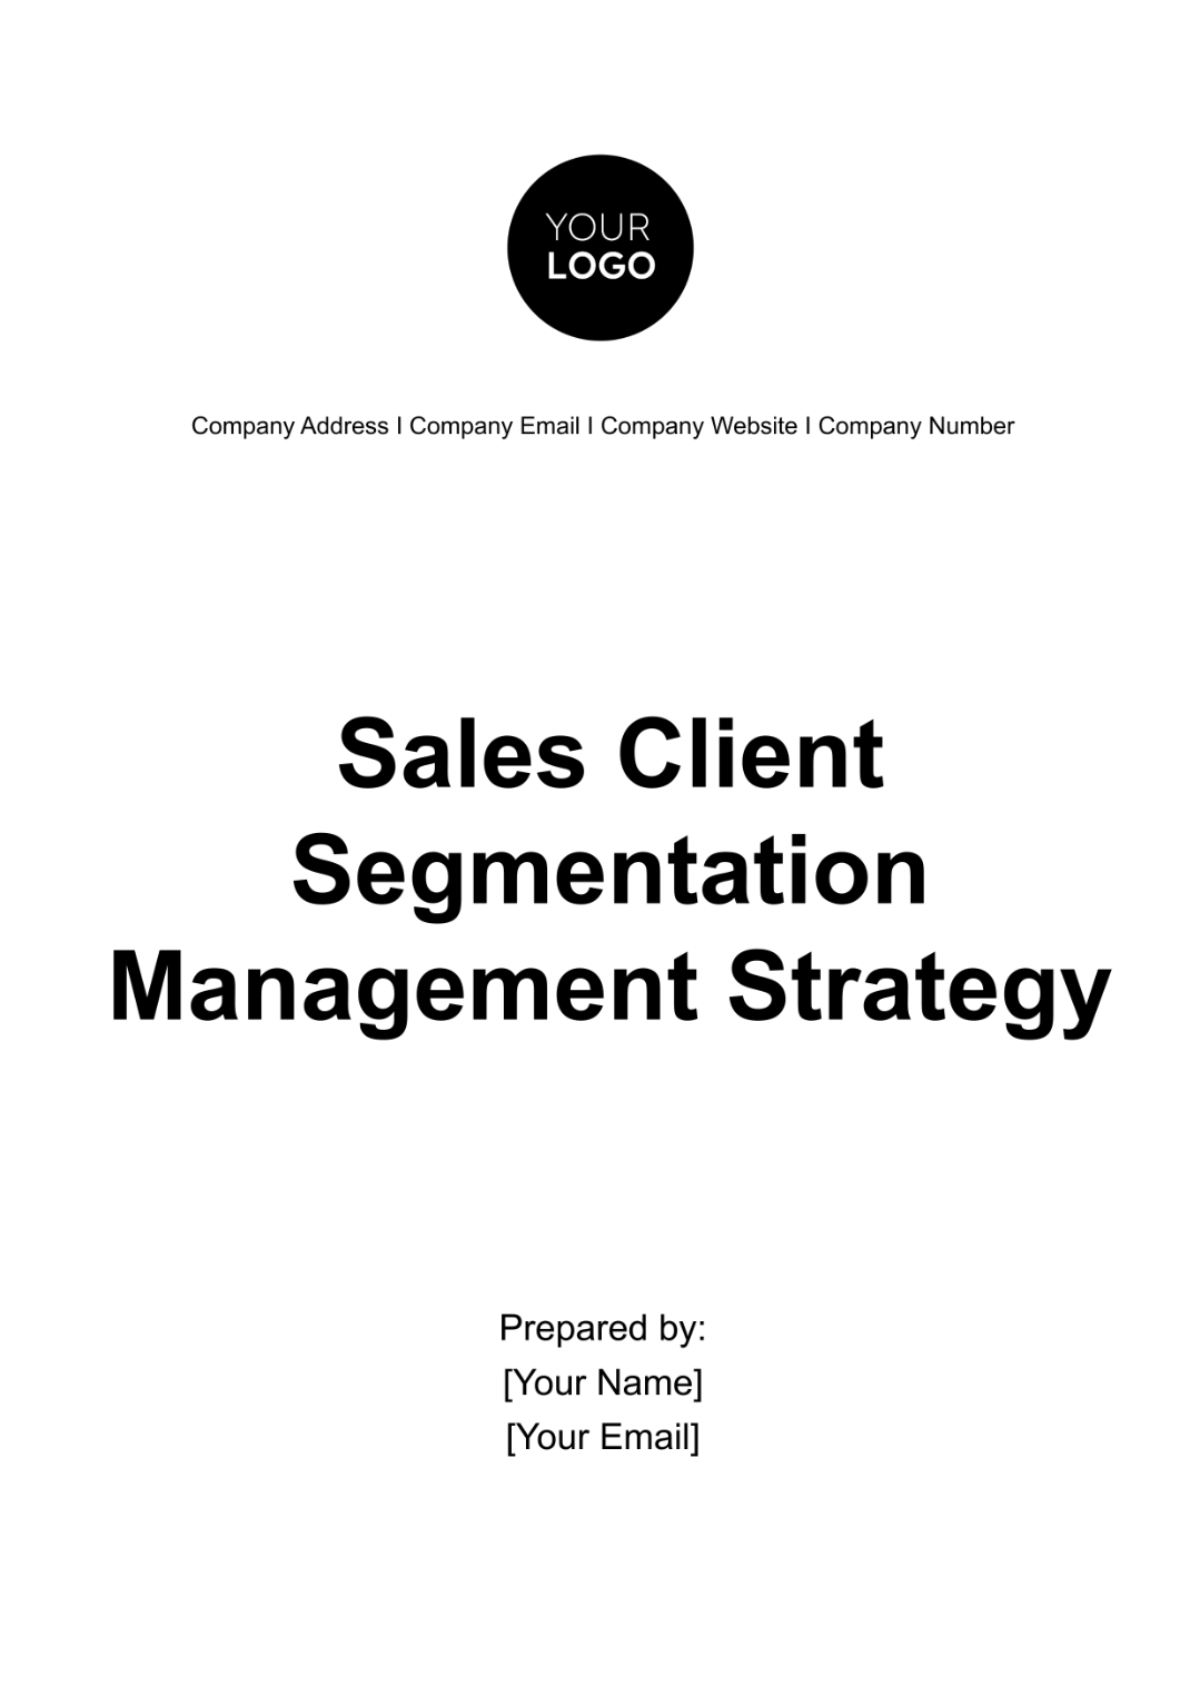 Free Sales Client Segmentation Management Strategy Template